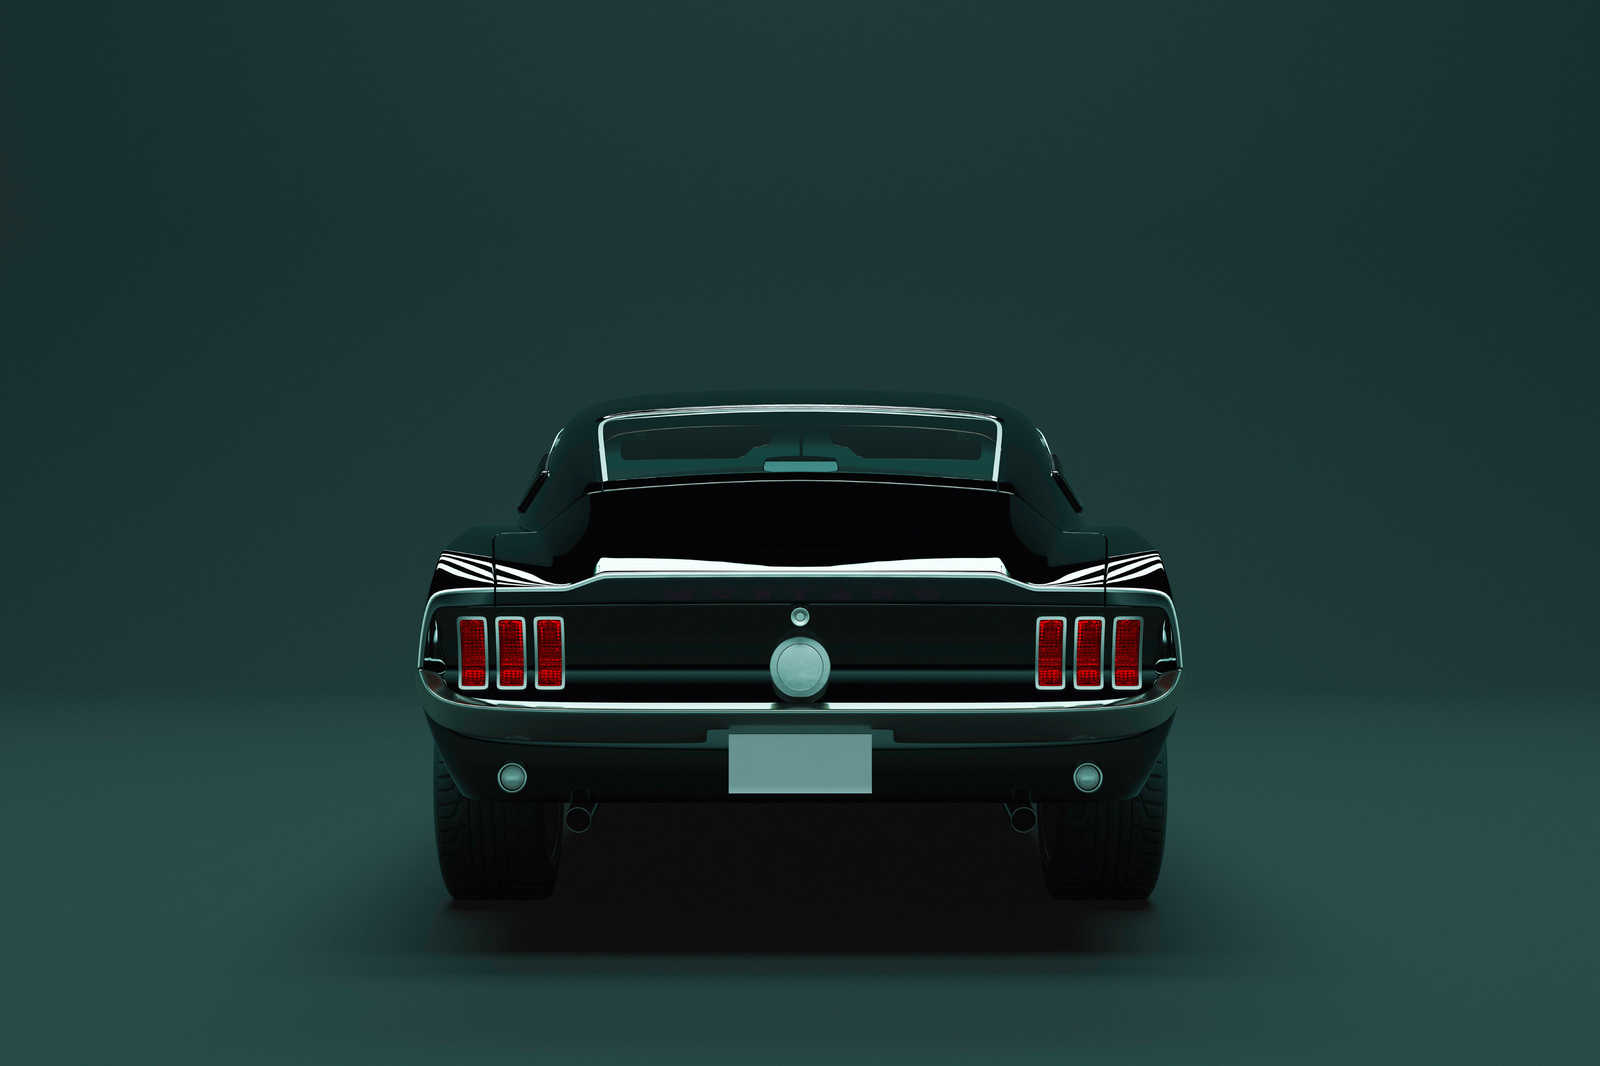             Mustang 3 - American Muscle Car Pintura en lienzo - 0,90 m x 0,60 m
        